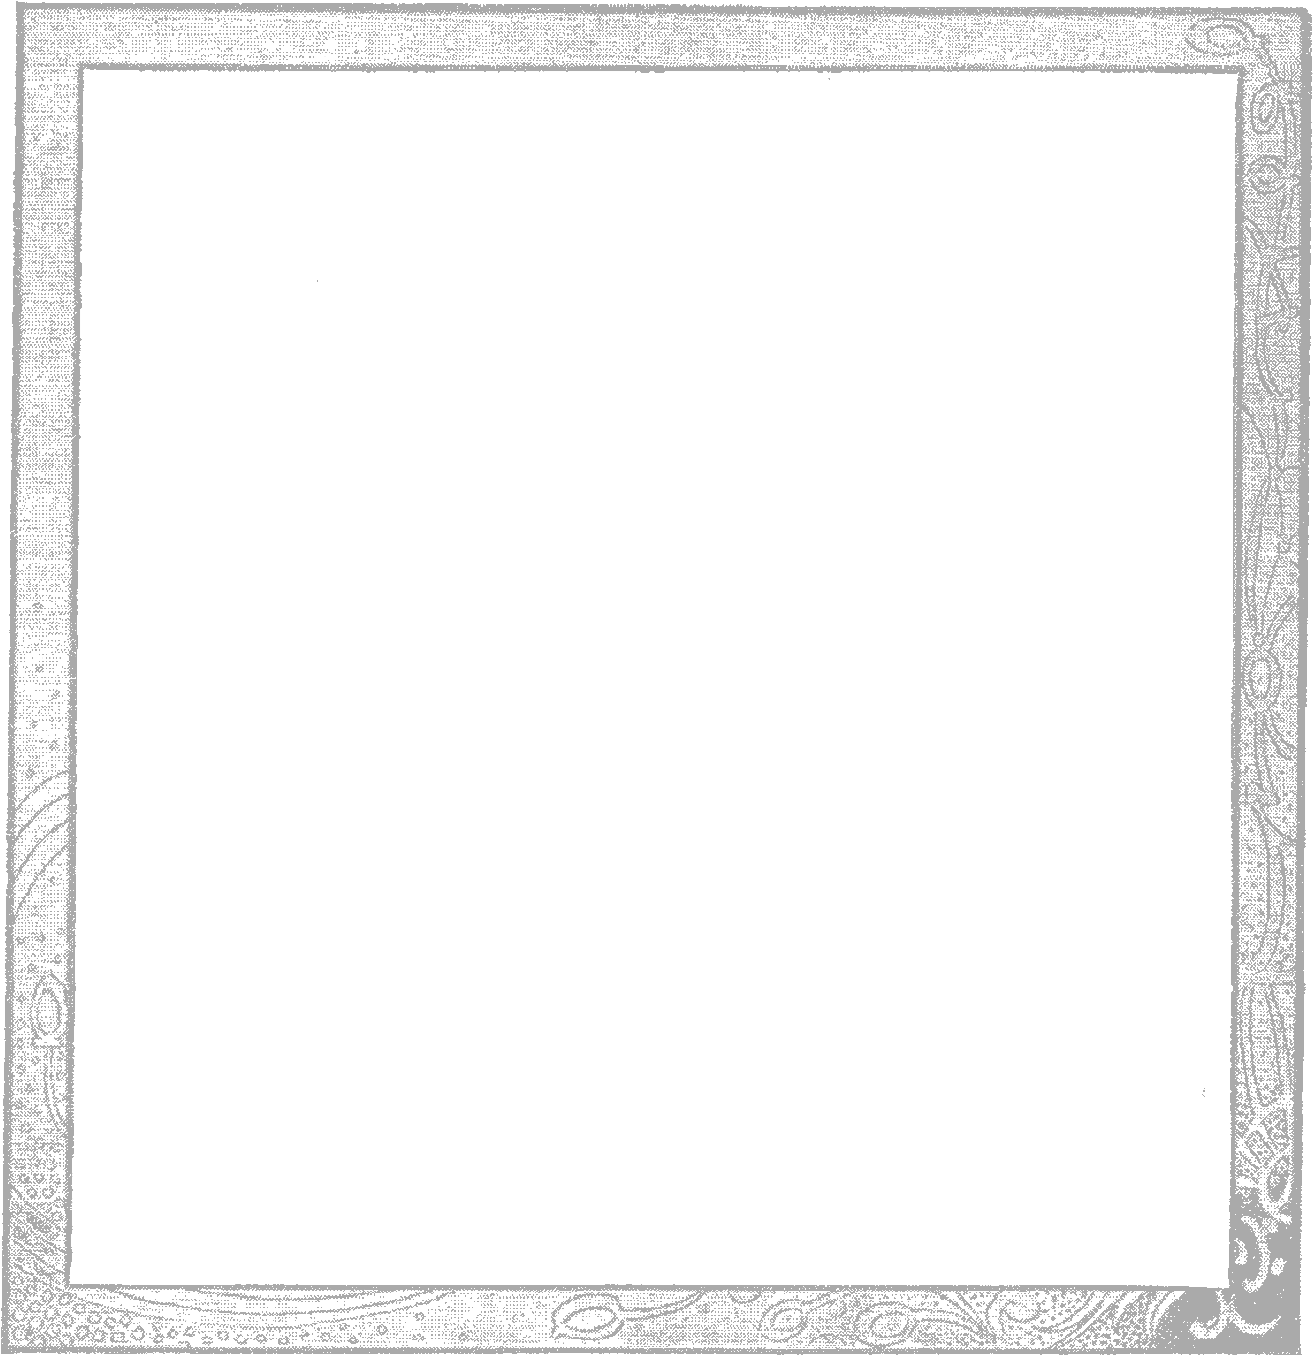 Gray Frame PNG Image File